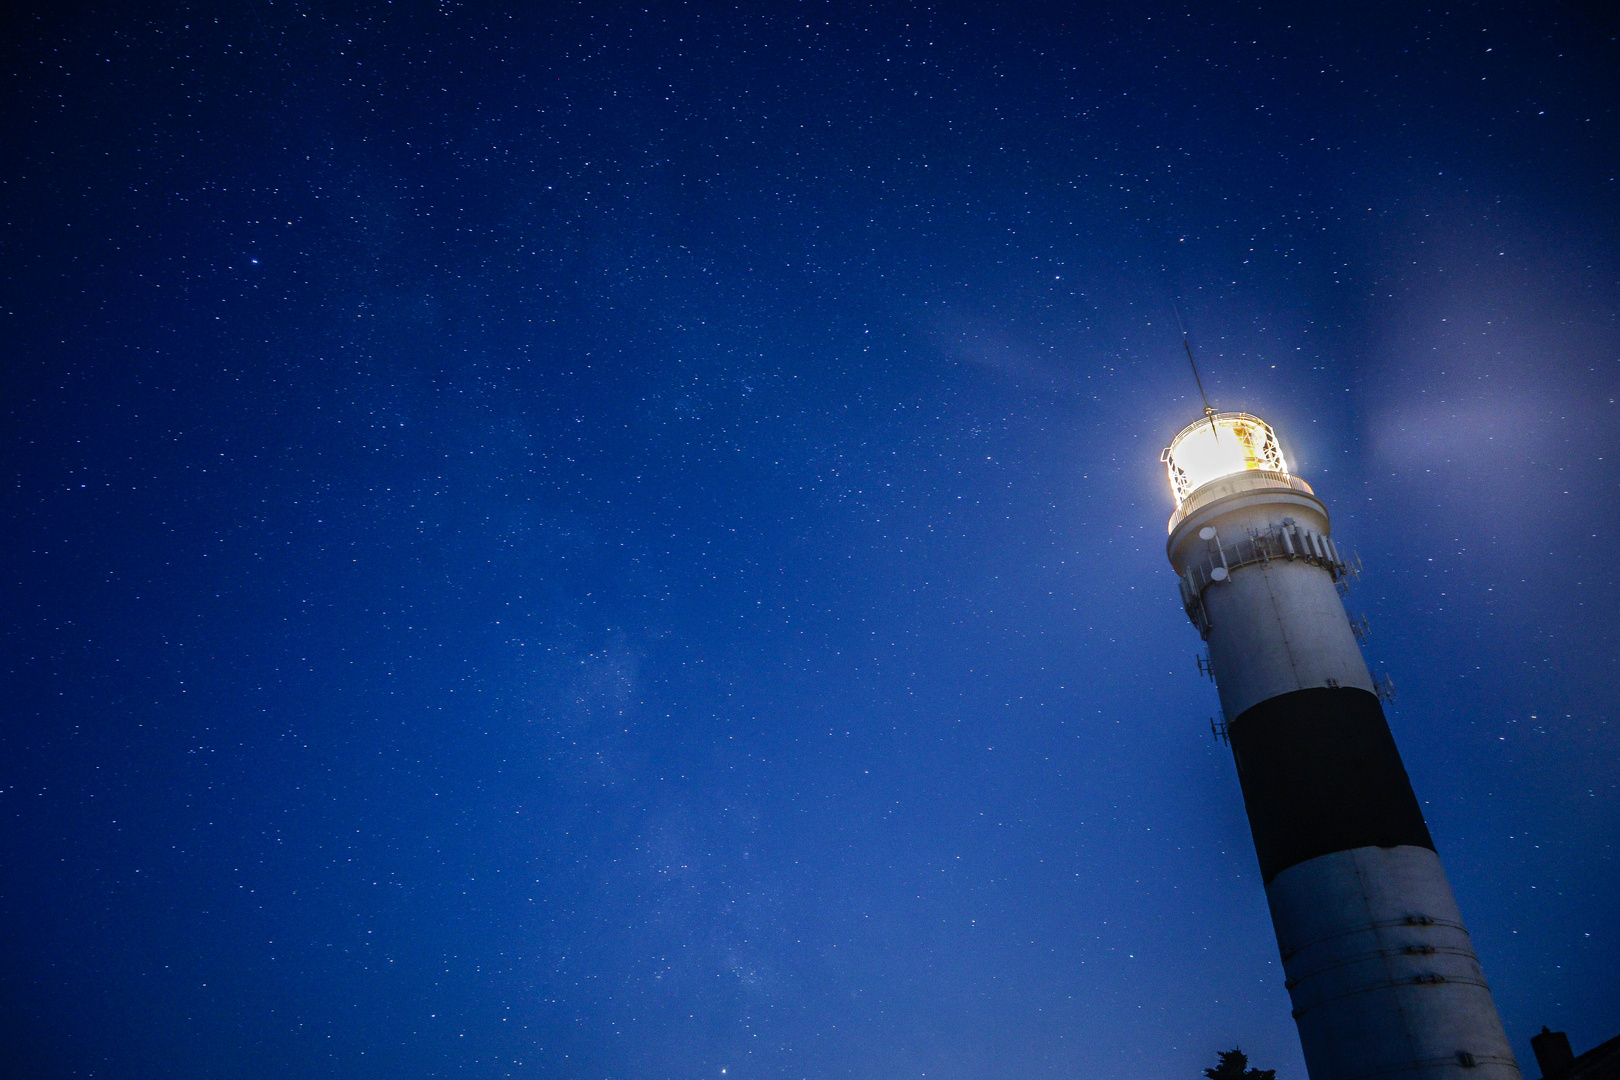 Kampen Lighthouse stars